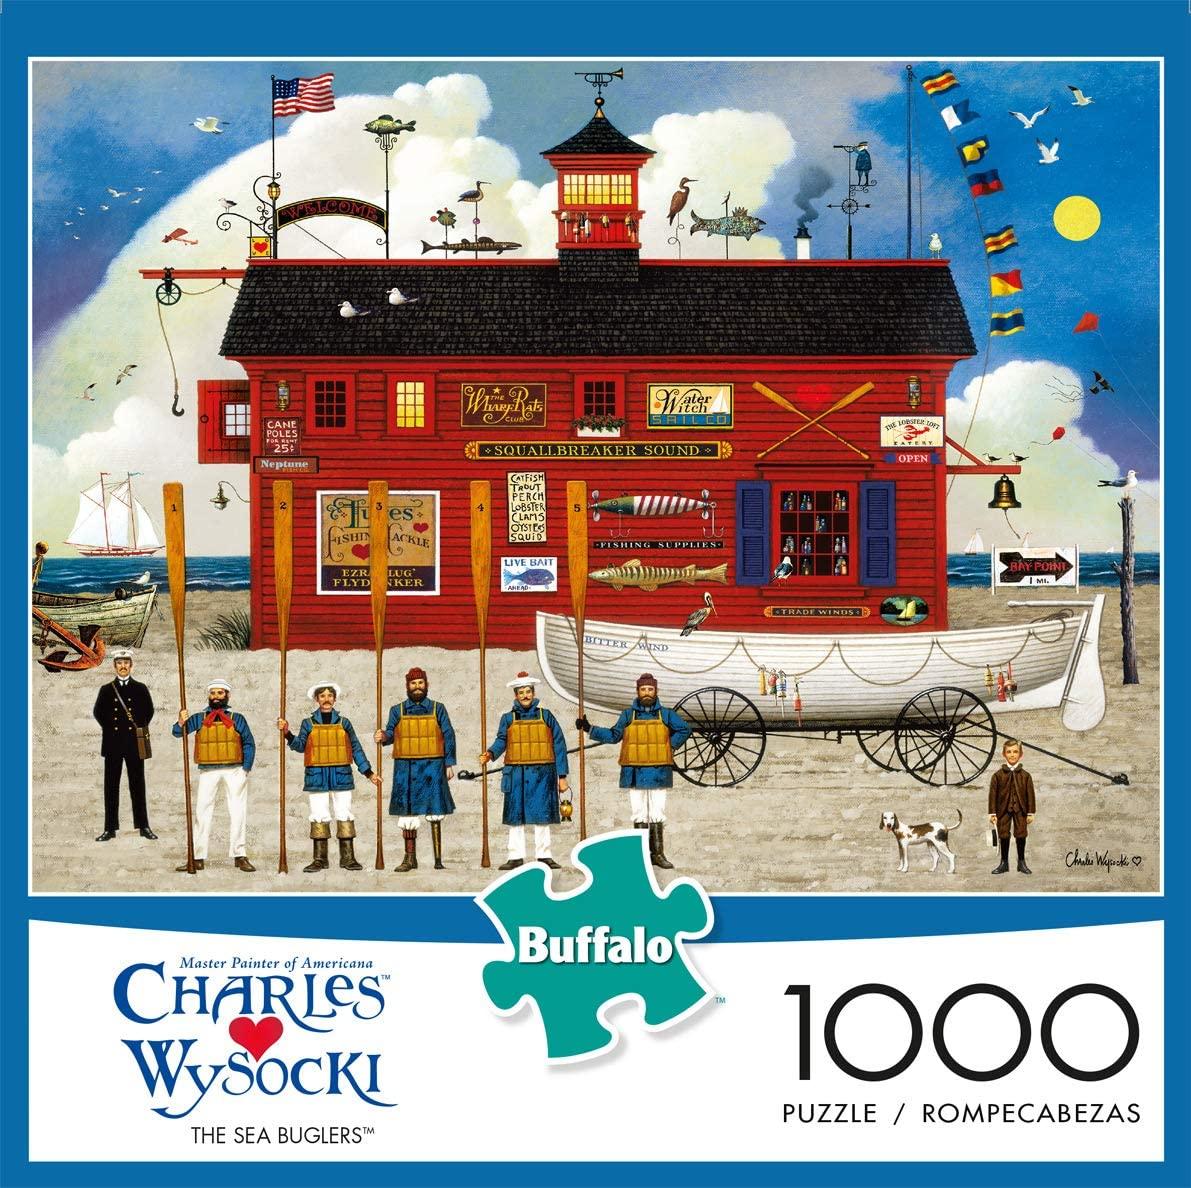 Buffalo Games Charles Wysocki The Sea Buglers Jigsaw Puzzle for $8.18